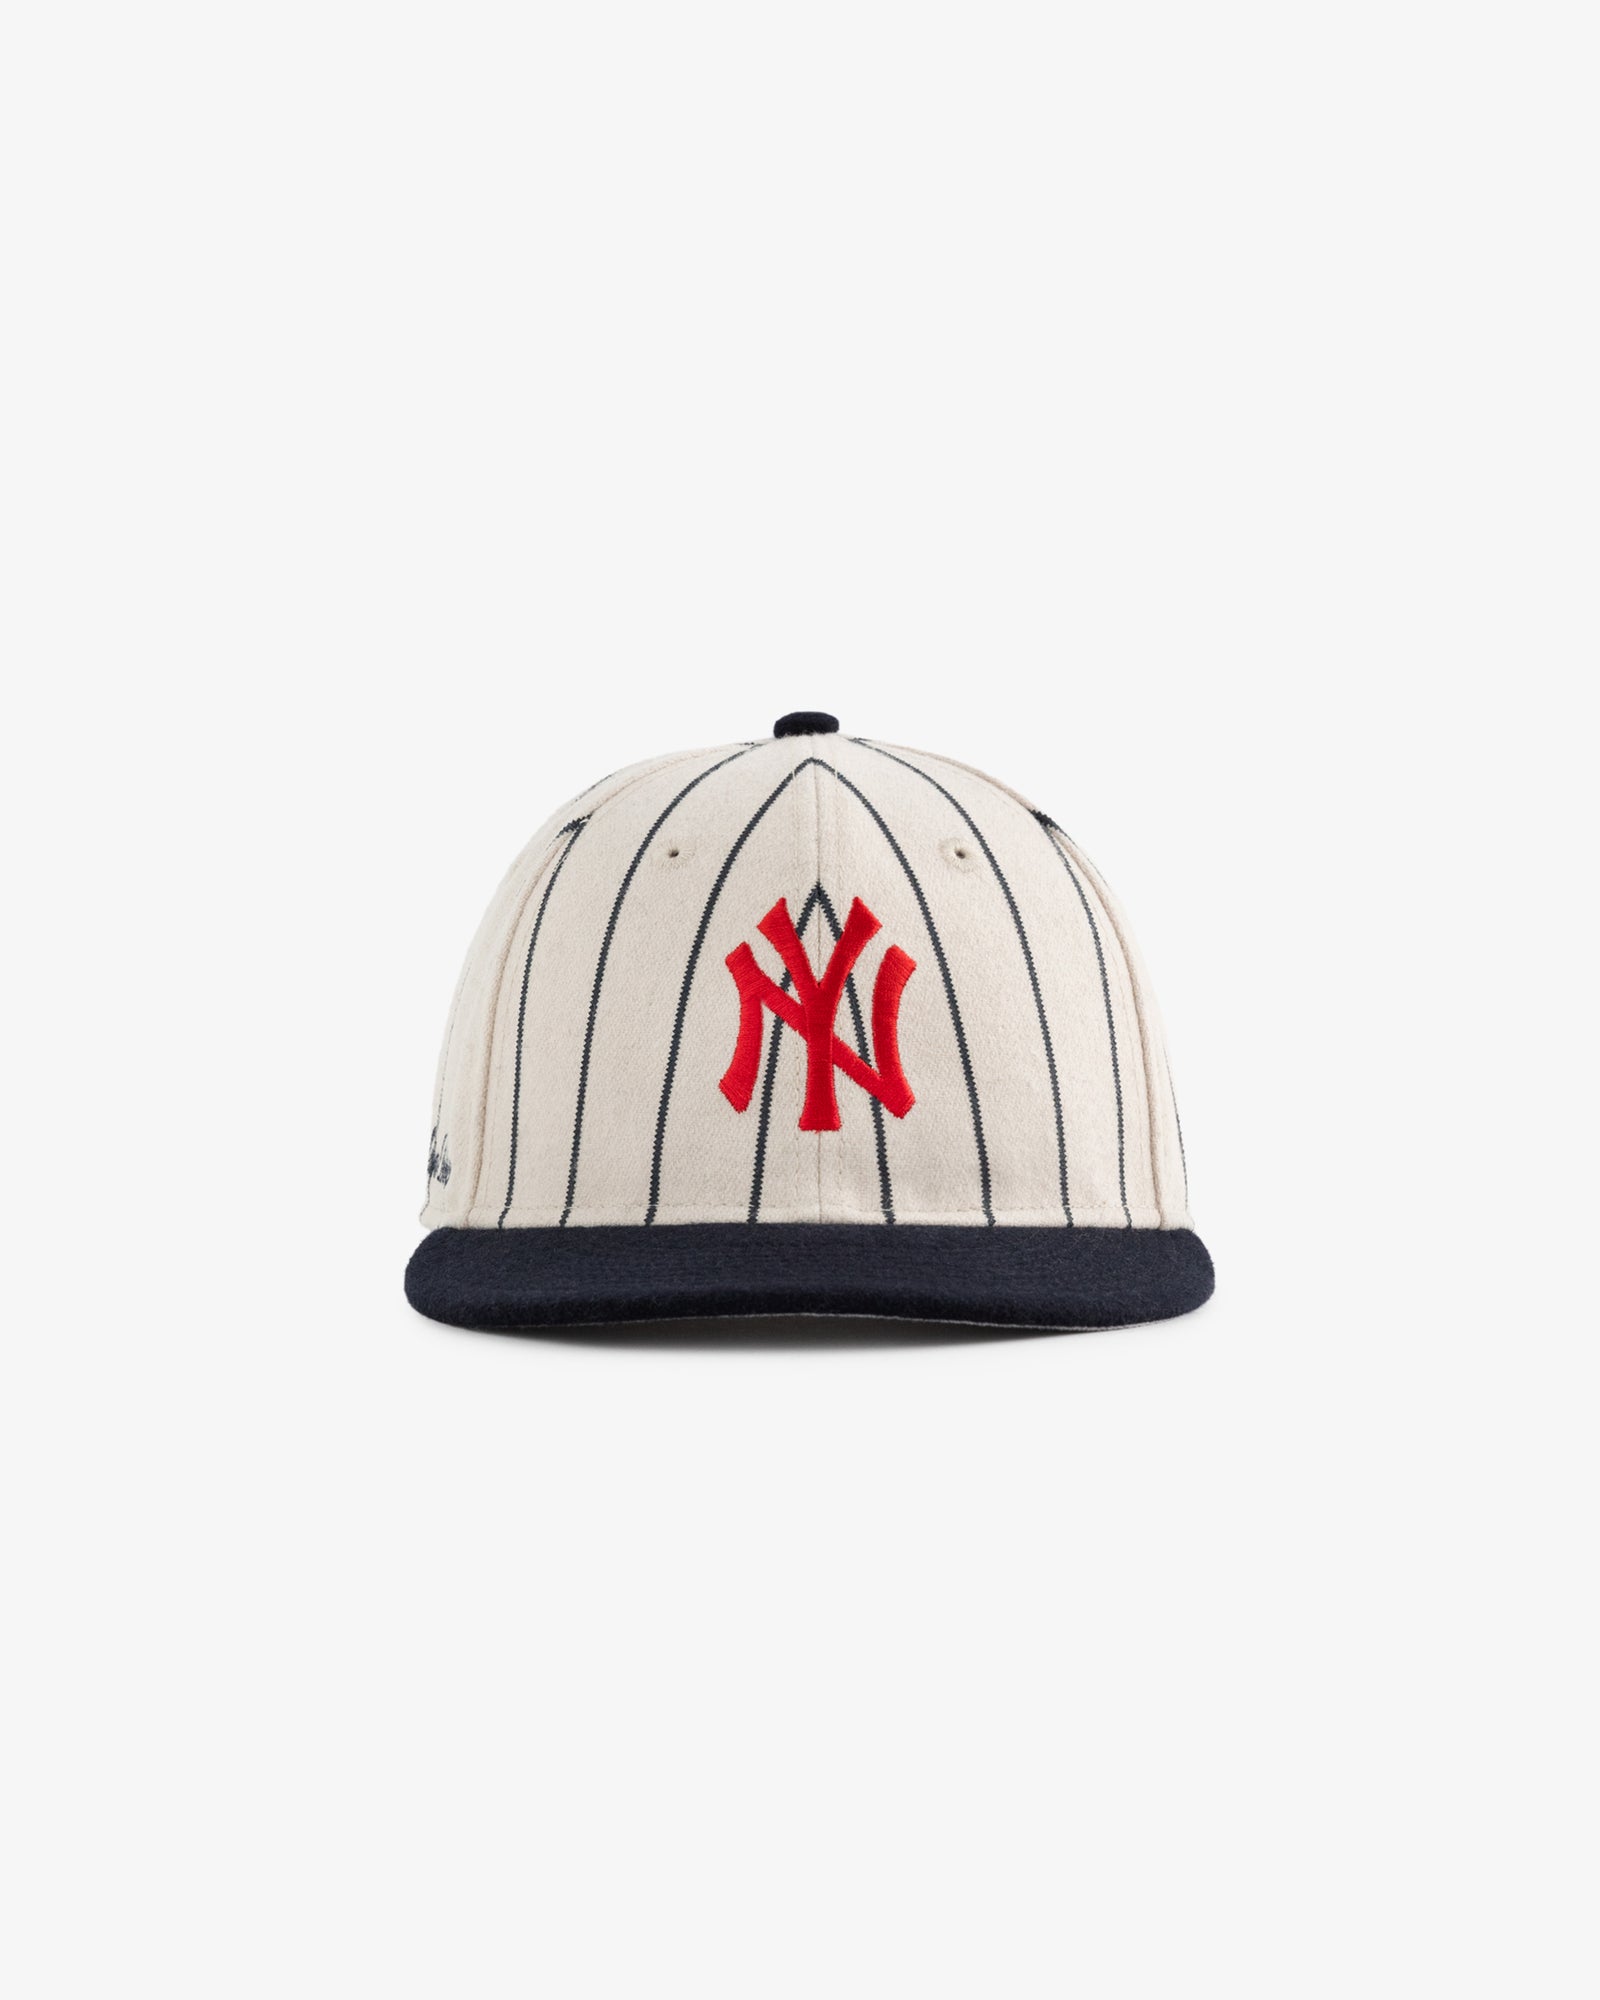 ALD / New Era Wool Yankees Hat-